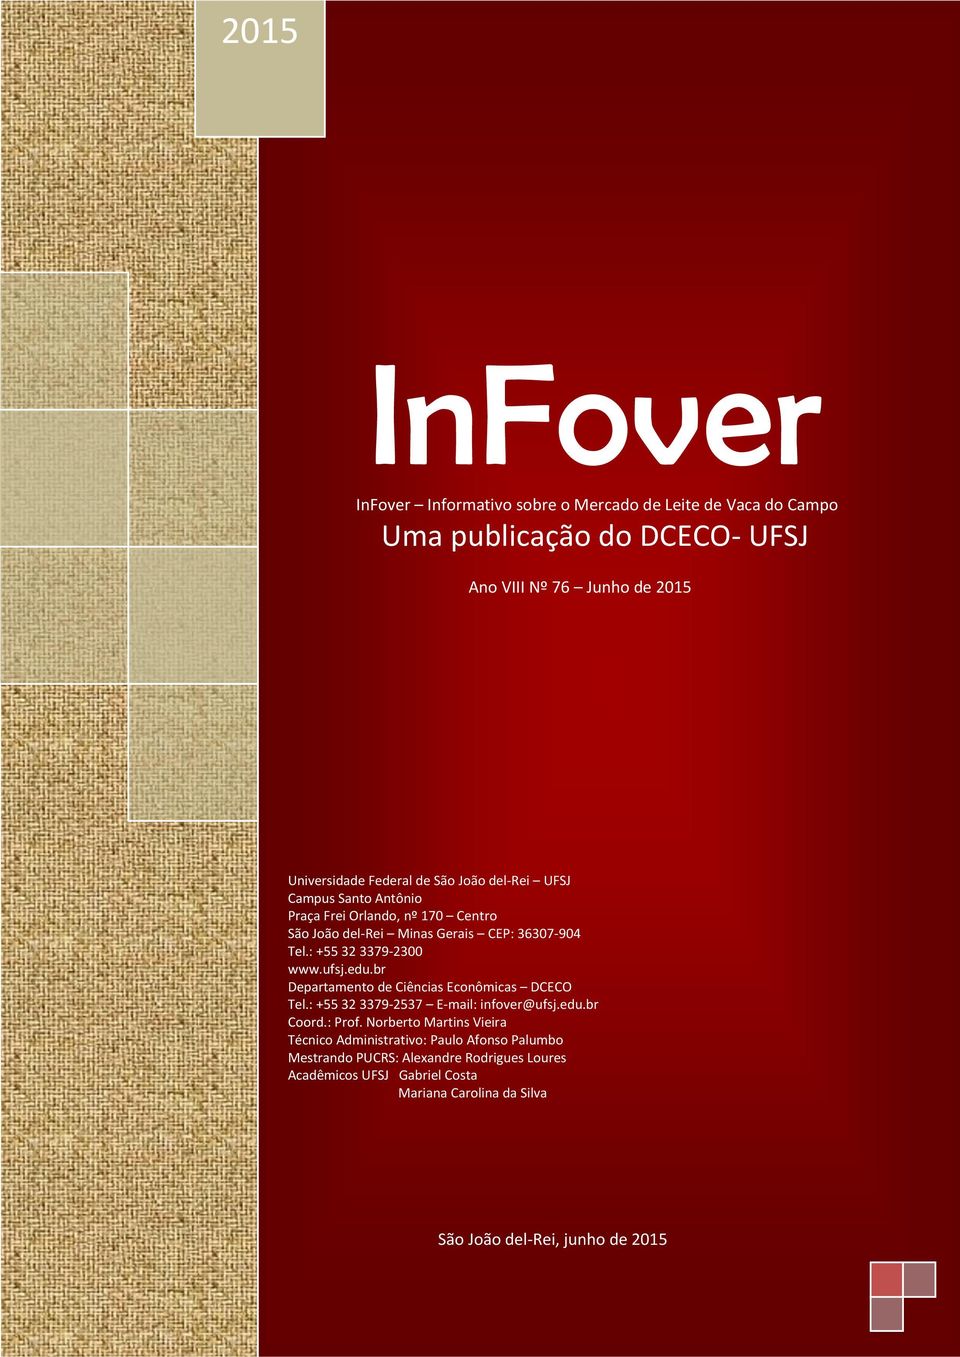 : +55 32 3379-2300 www.ufsj.edu.br Departamento de Ciências Econômicas DCECO Coord.: Prof.